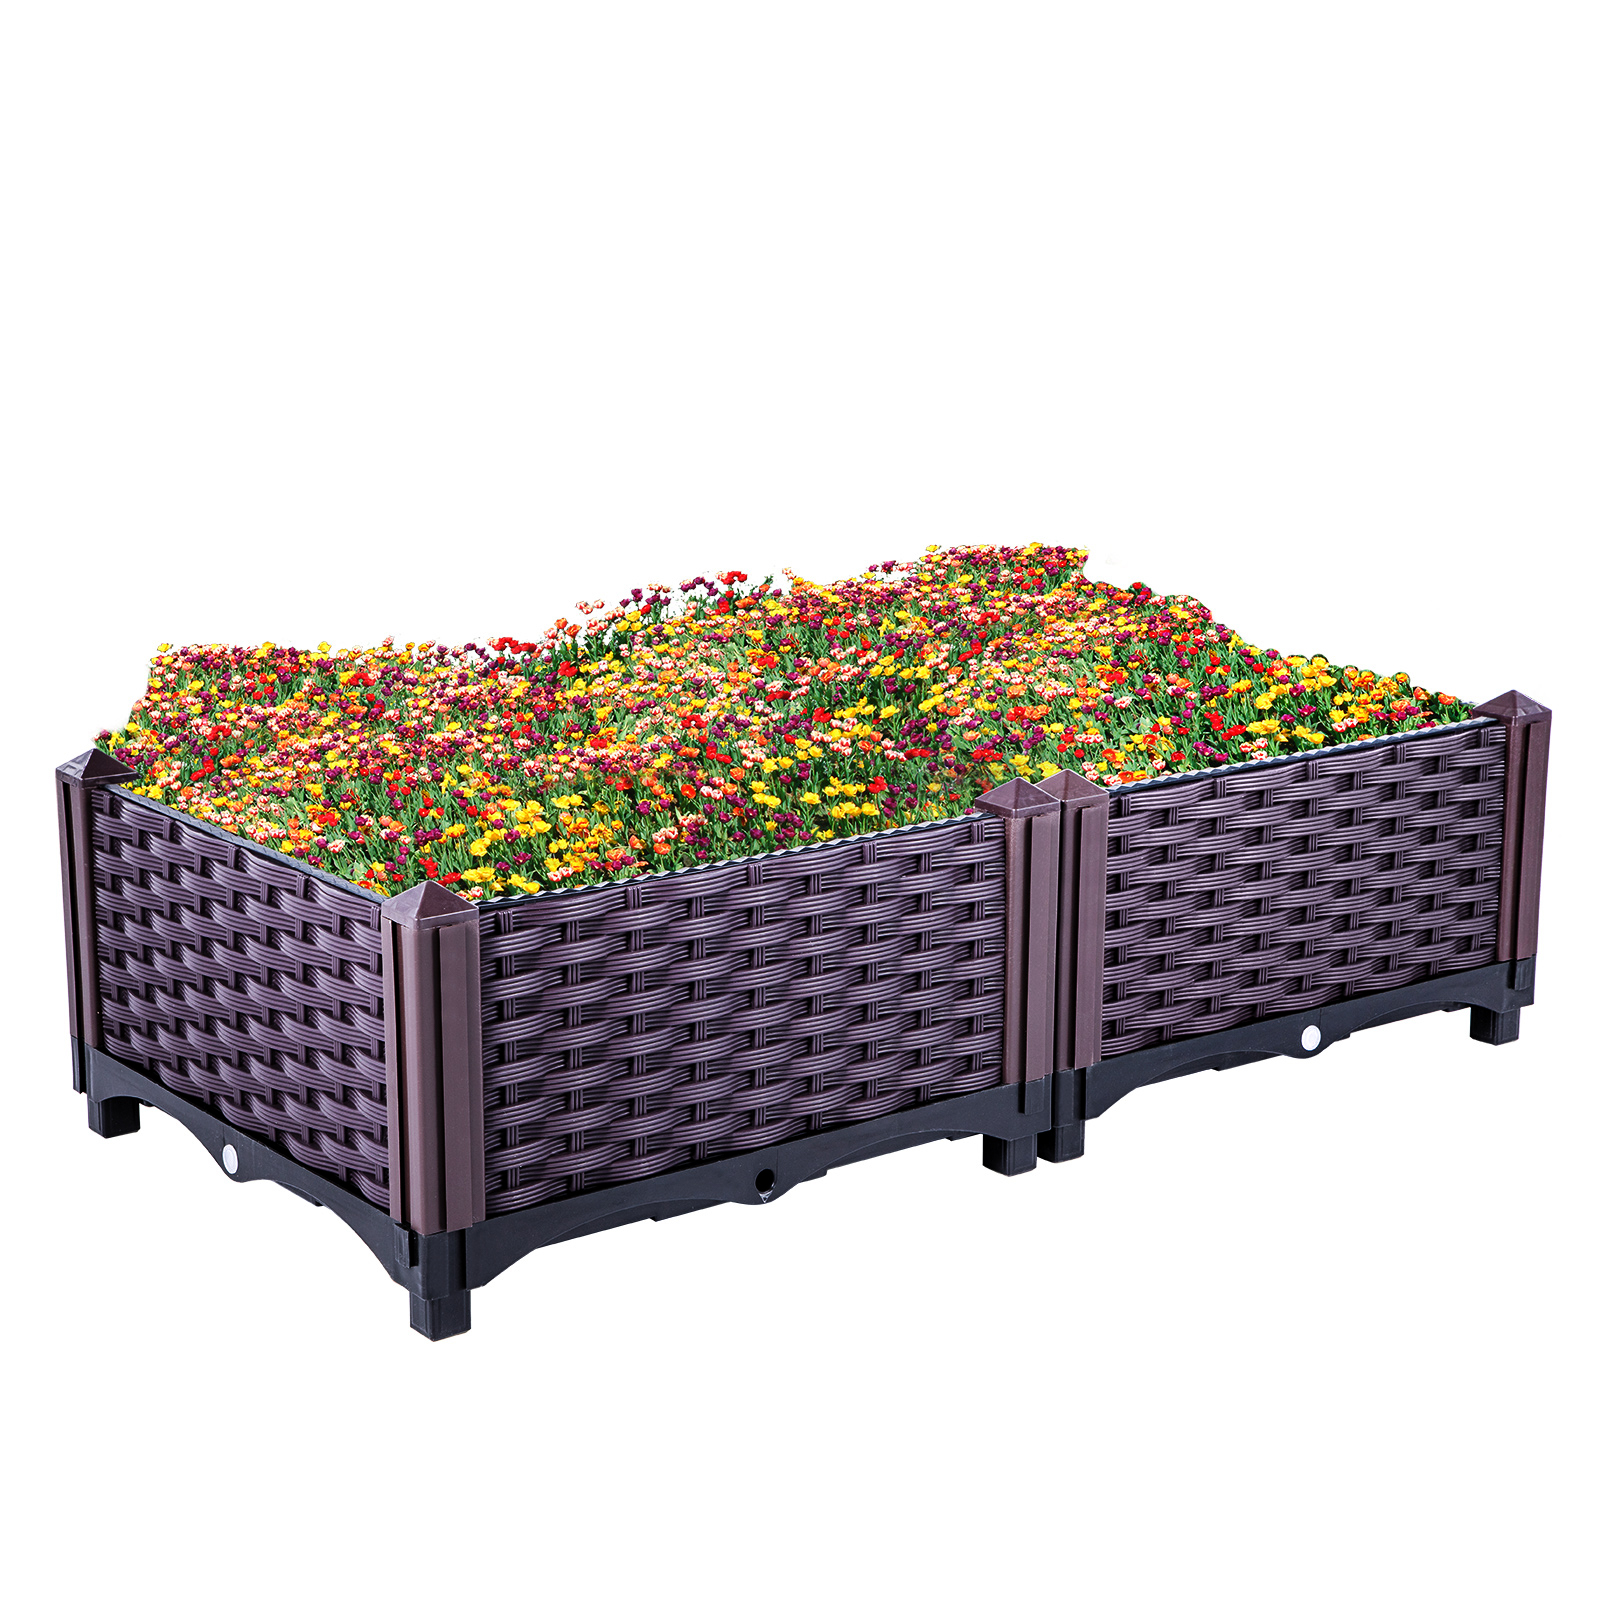 Vevor Plastic Raised Garden Bed Flower Box Kit 9"h Brown Rattan Style Set Of 2 от Vevor Many GEOs